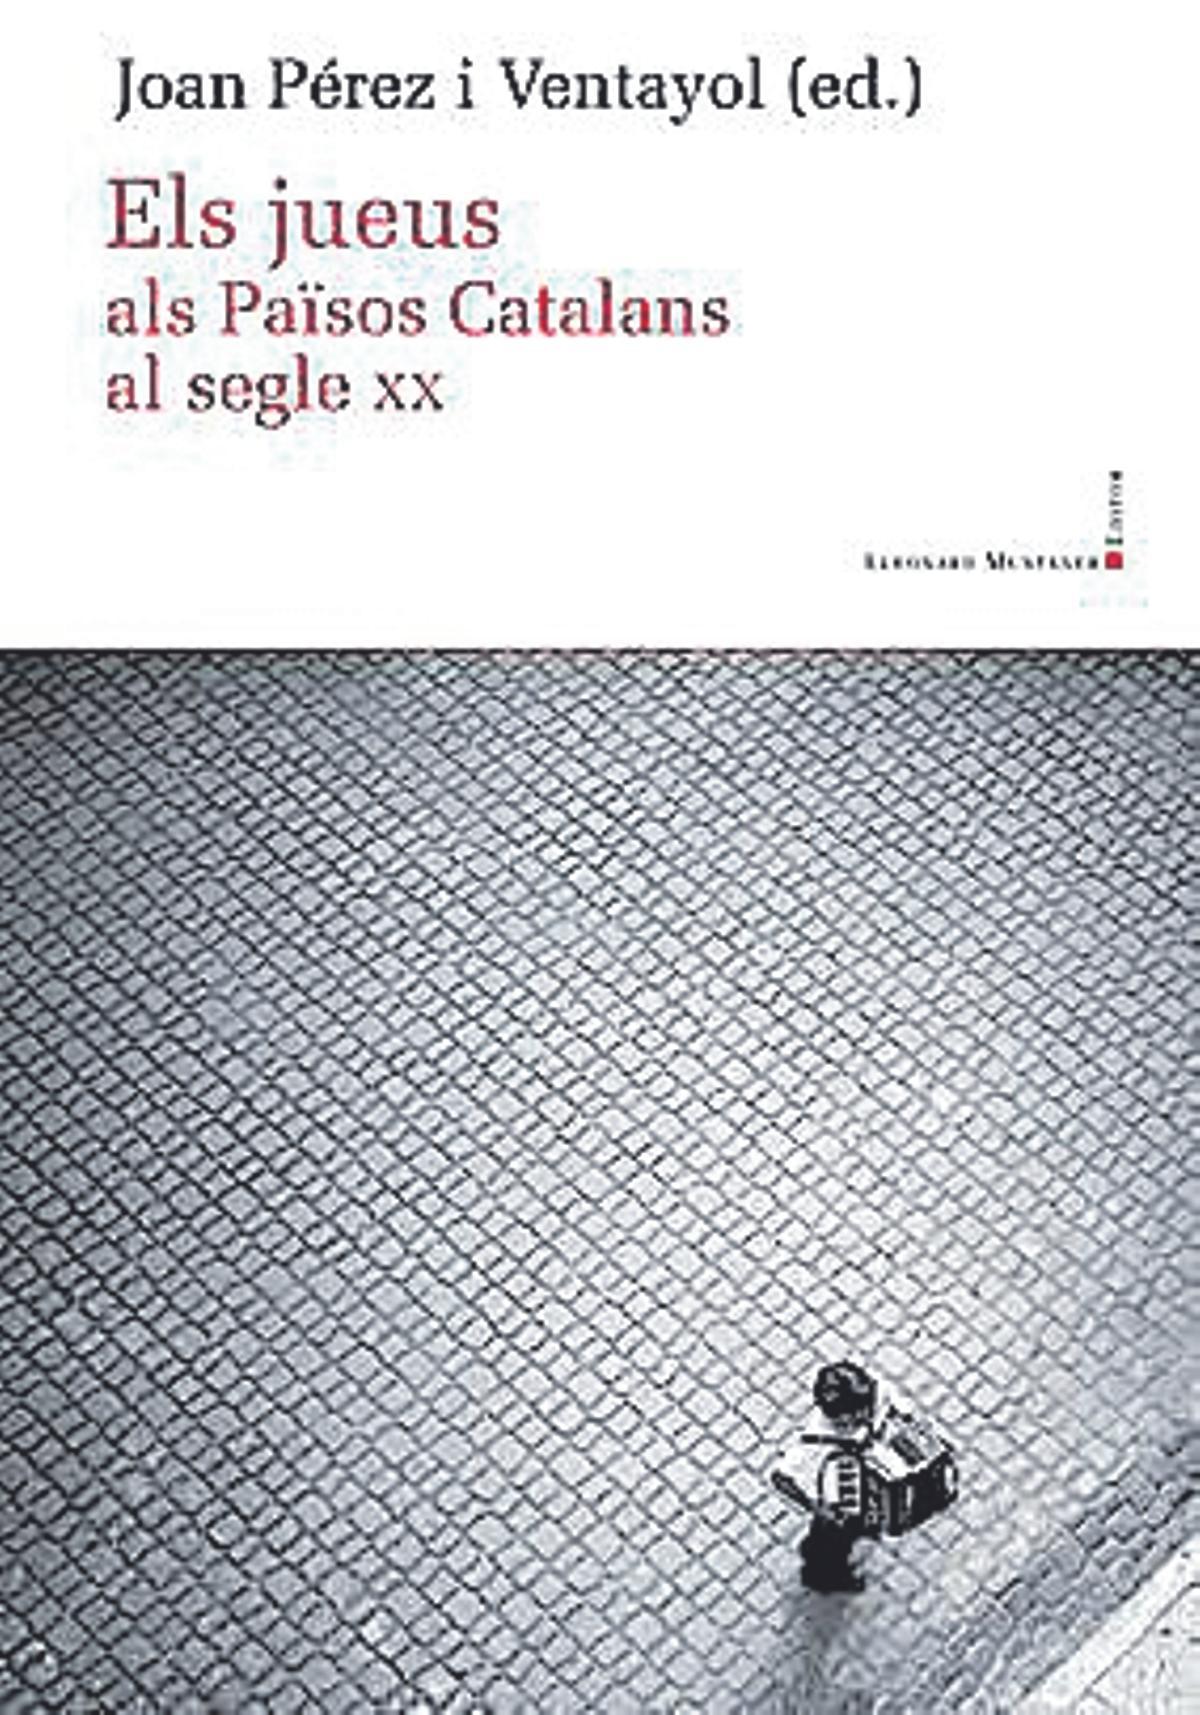 Els jueus als P. Catalans | Joan Pérez i Ventayol. Lleonard Muntaner. 24 euros.